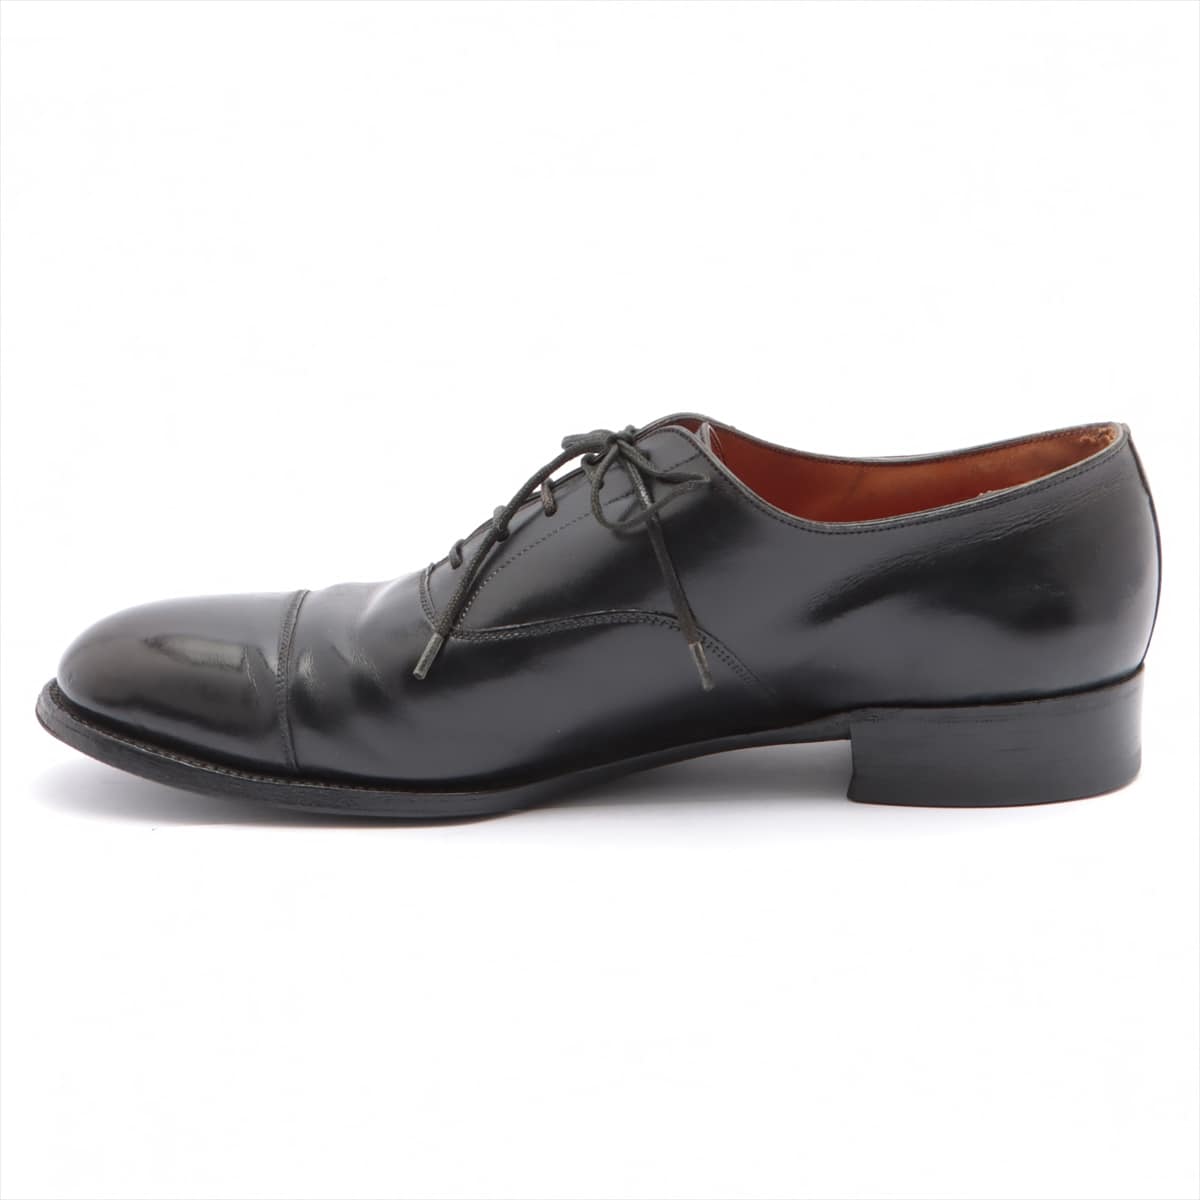 J. M. Weston Leather Leather shoes 7.5D Men's Black Resoled